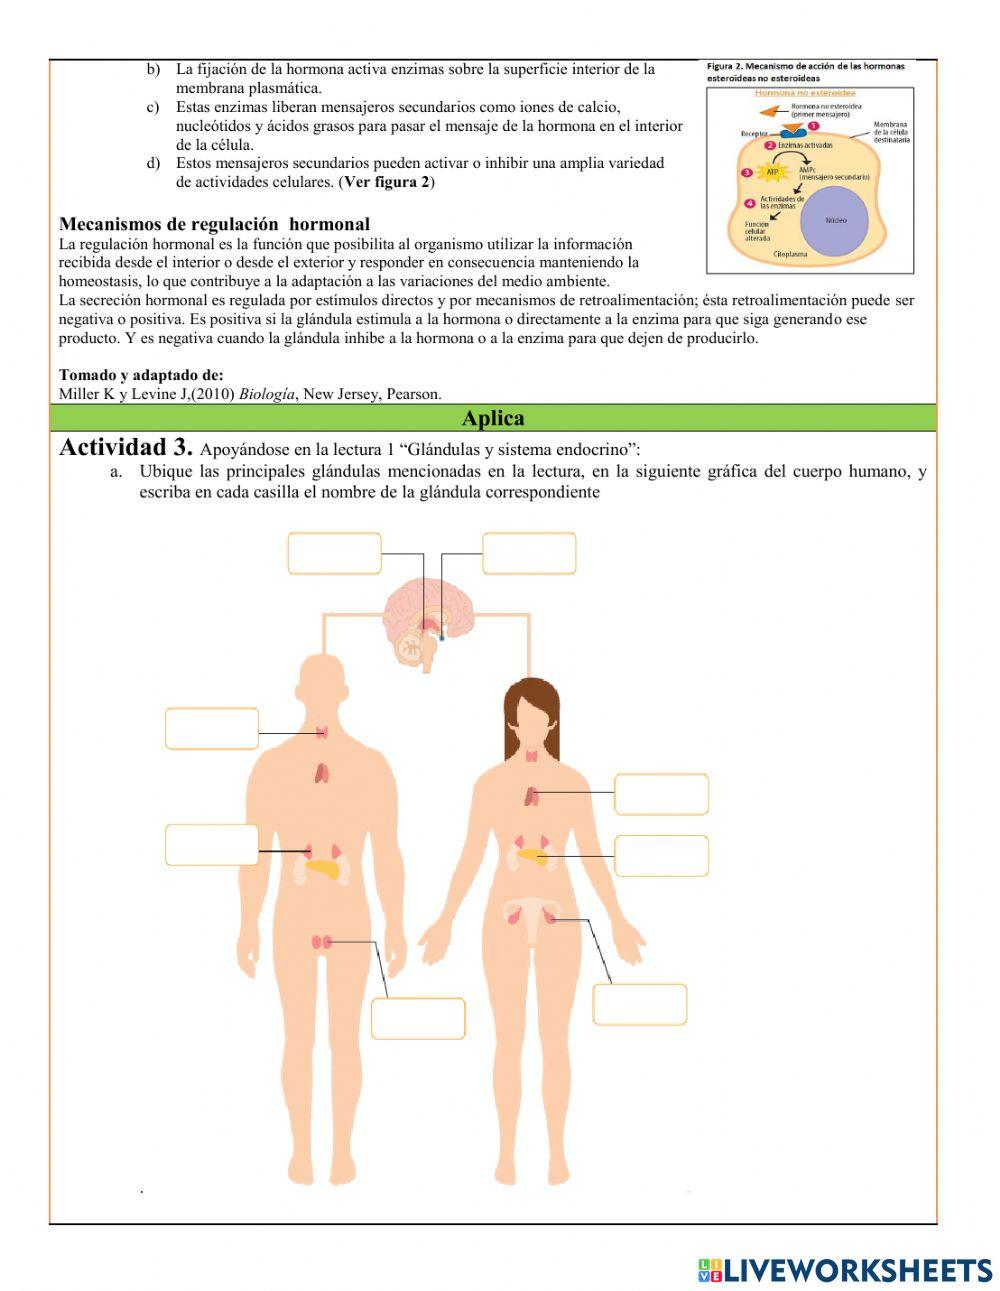 Glándulas y sistema endocrino.